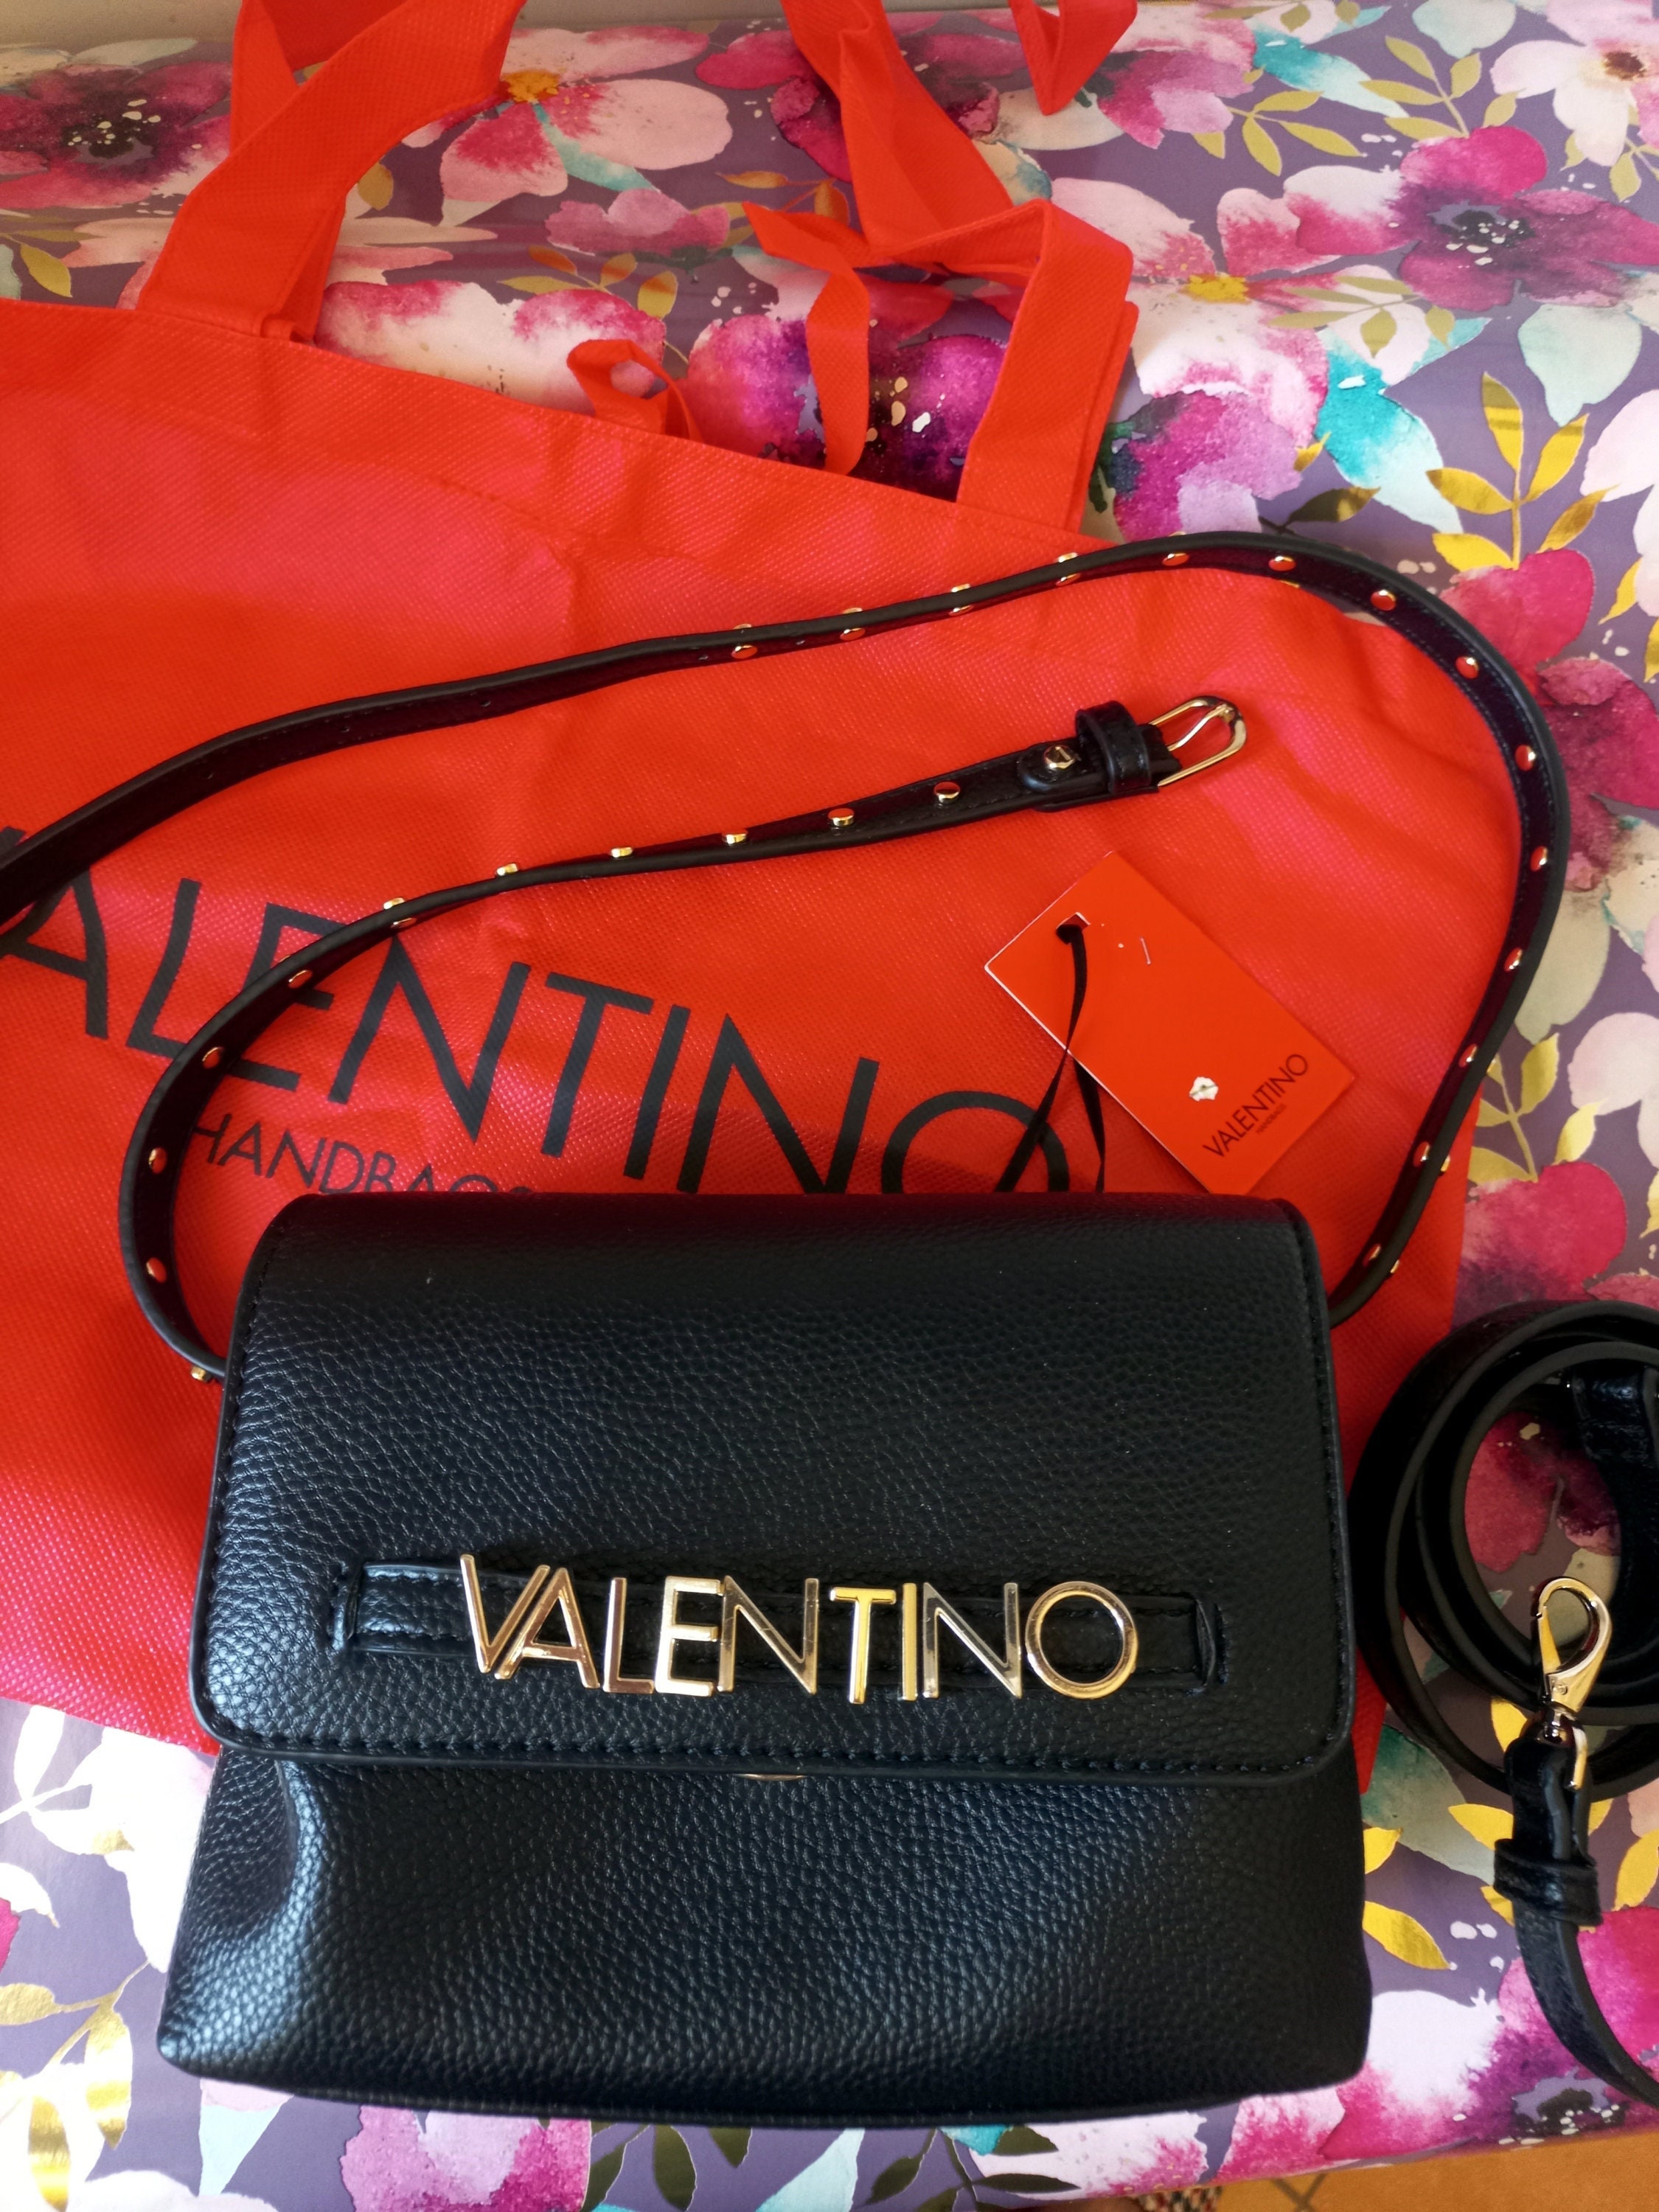 Mario Valentino Spa Bag Red And Gold Stunning